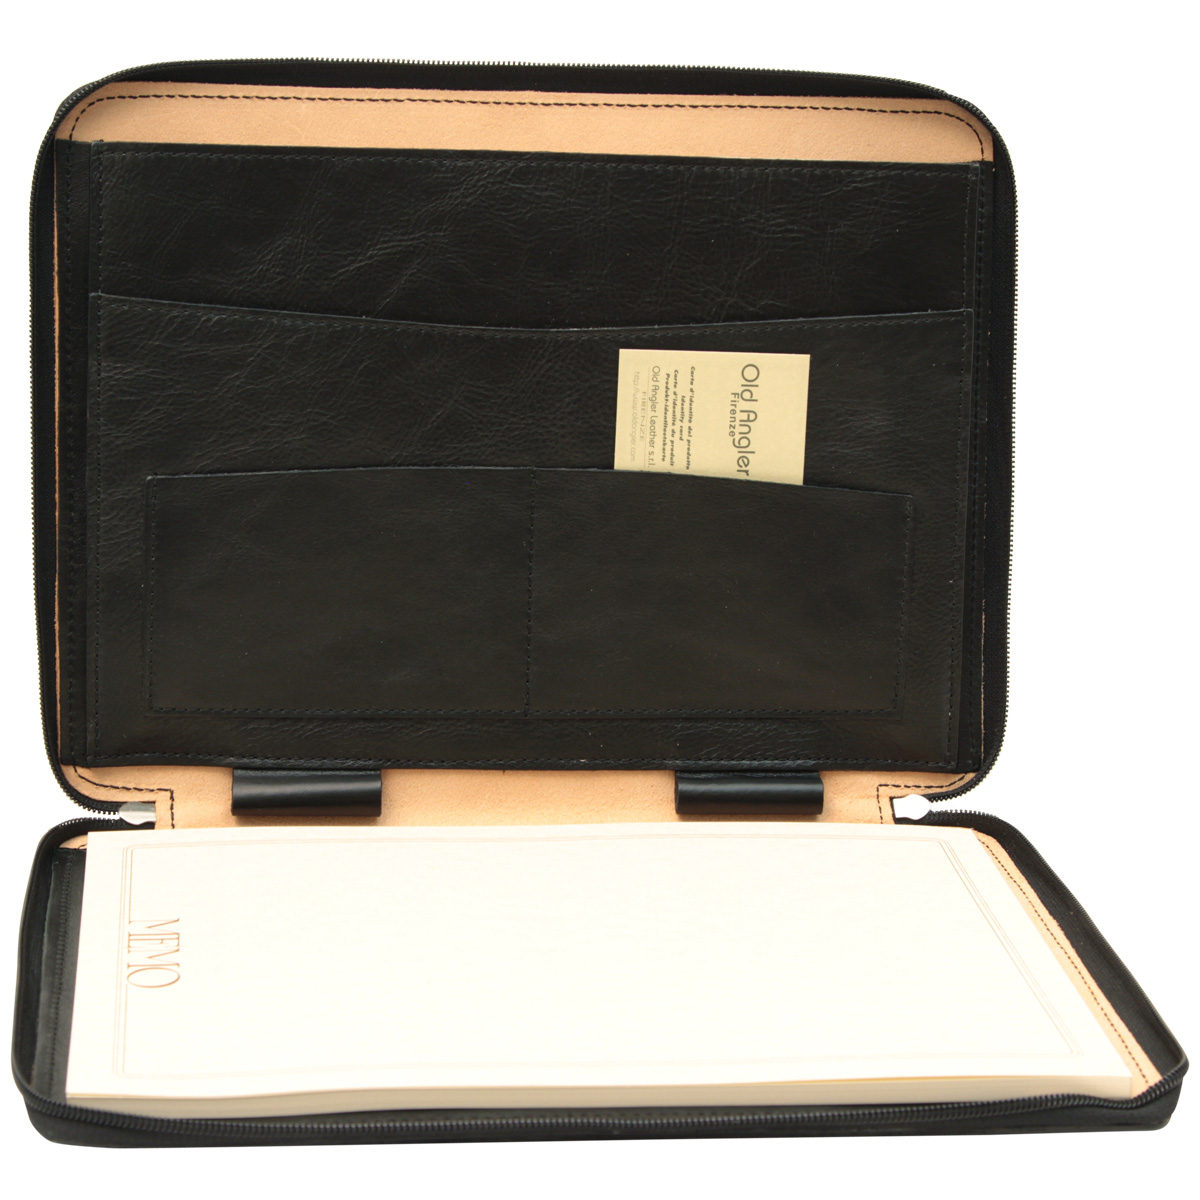 Cowhide leather portfolio - Black | 059489NE UK | Old Angler Firenze